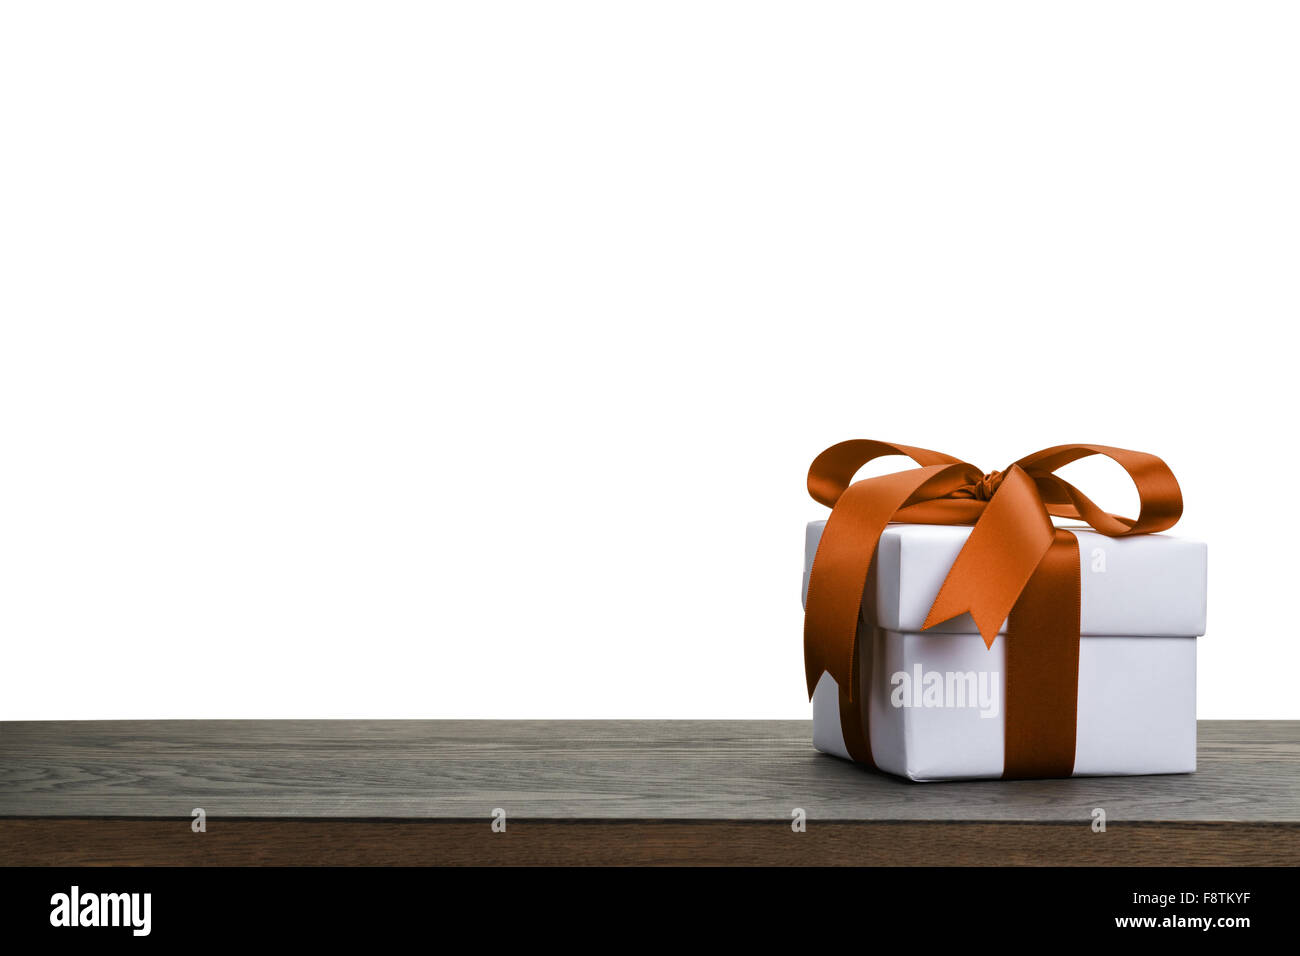 border with white gift box with orange ribbon bow Stock Photo